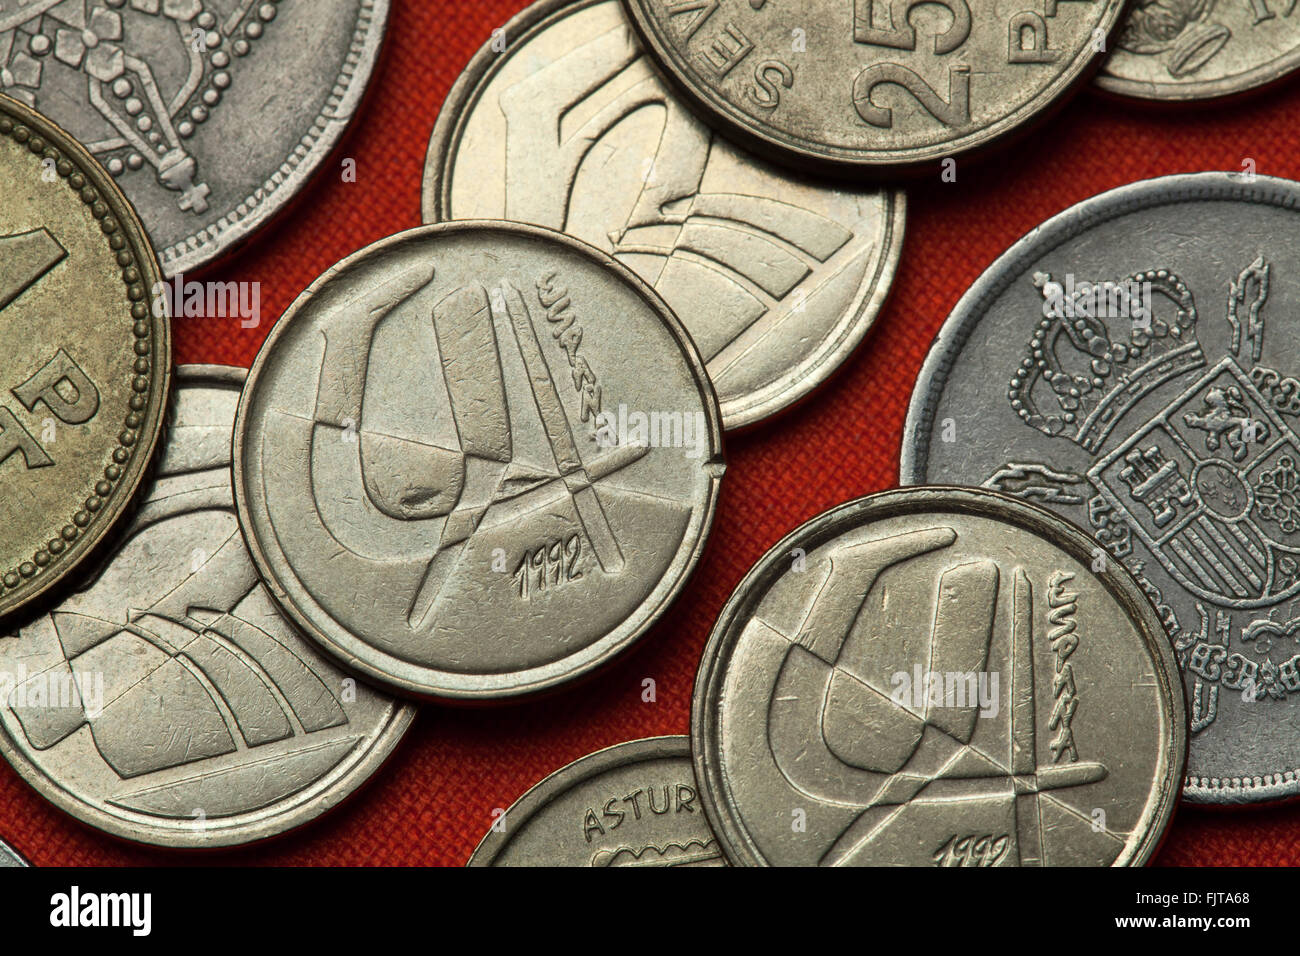 Coins of Spain. Spanish five peseta coins (1992). Stock Photo